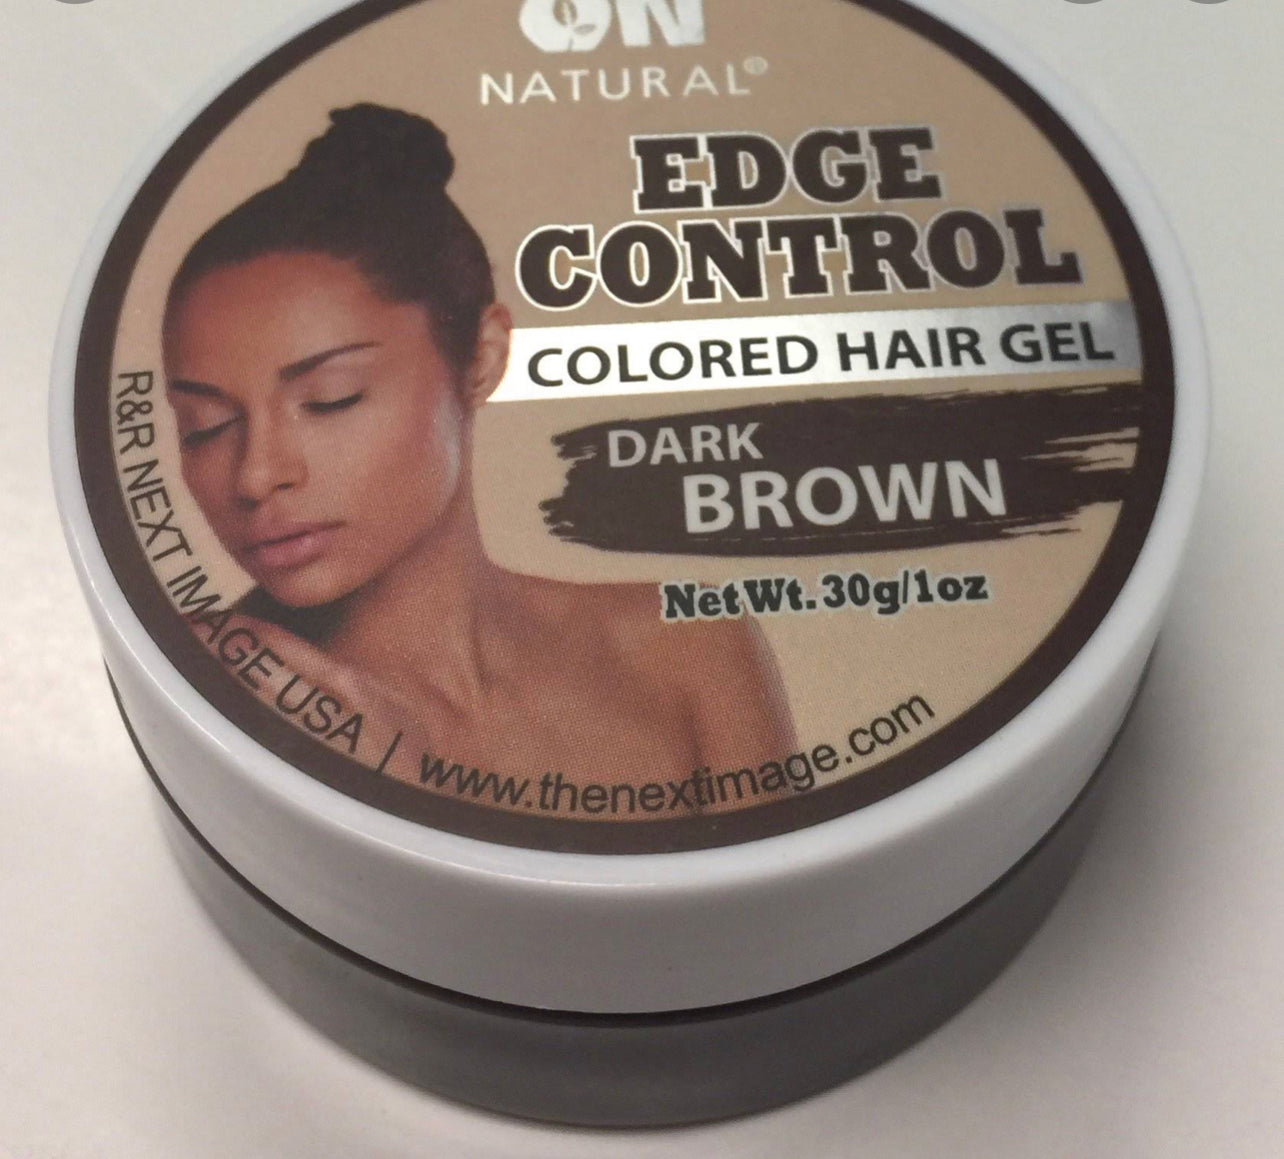 Colored Edge control 1oz dark Brown - Tam's Natural Solutions